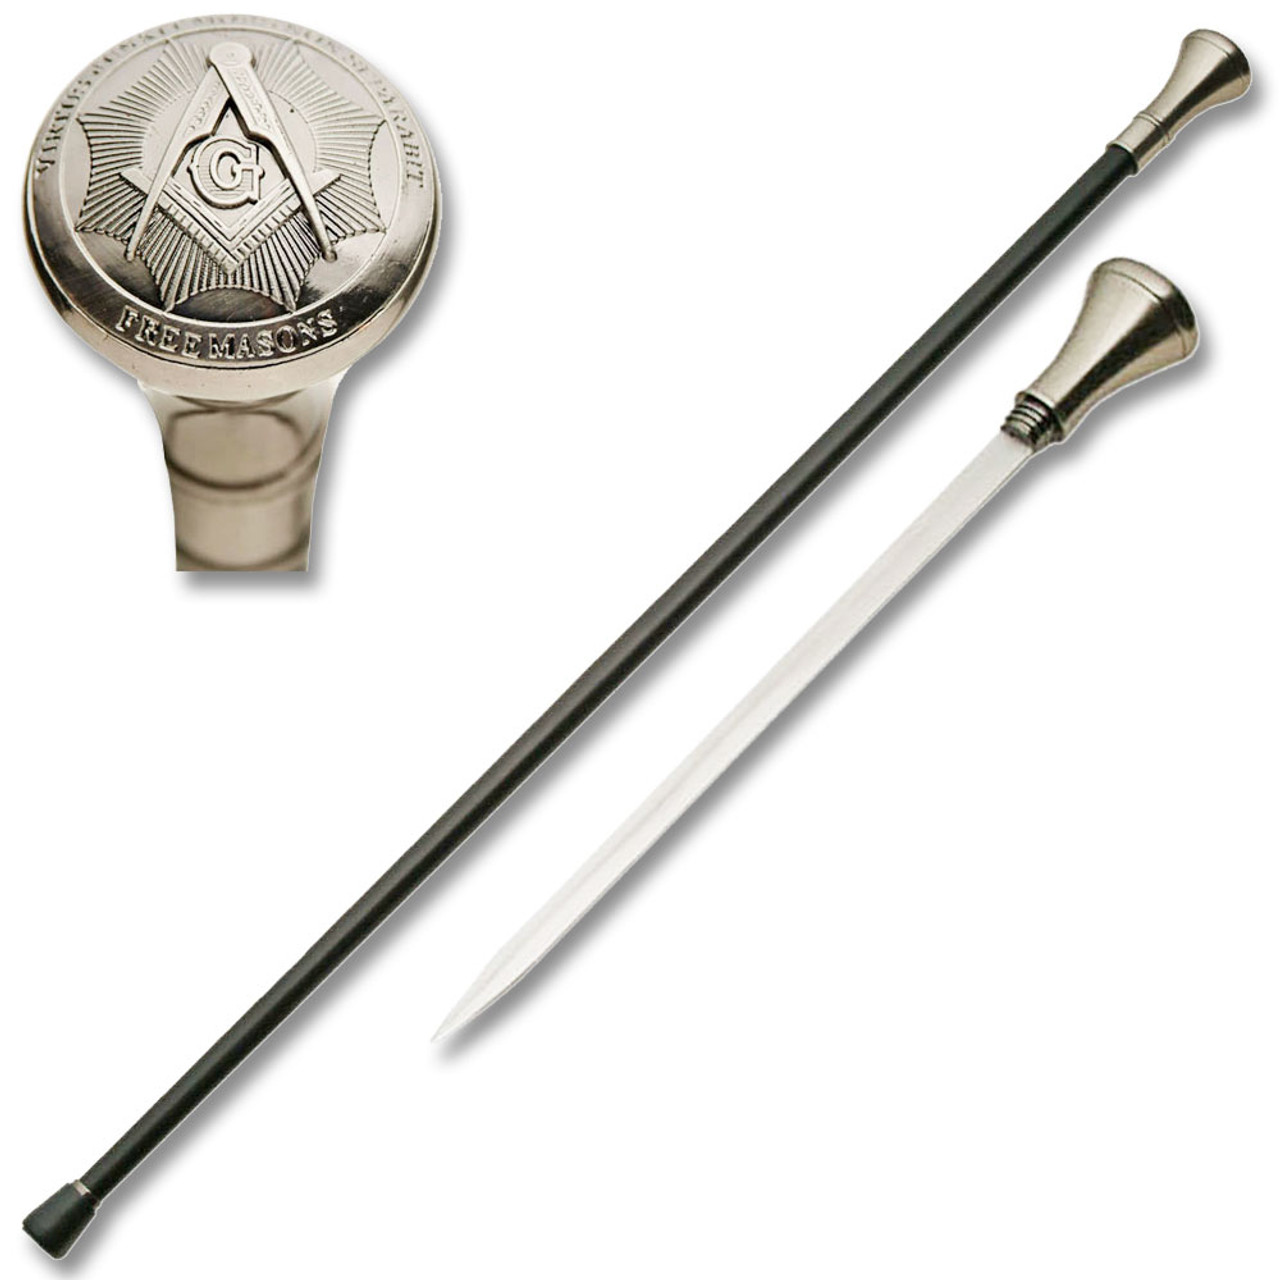 Mason Masonic Zinc Metal Walking Cane Sword - Edge Import